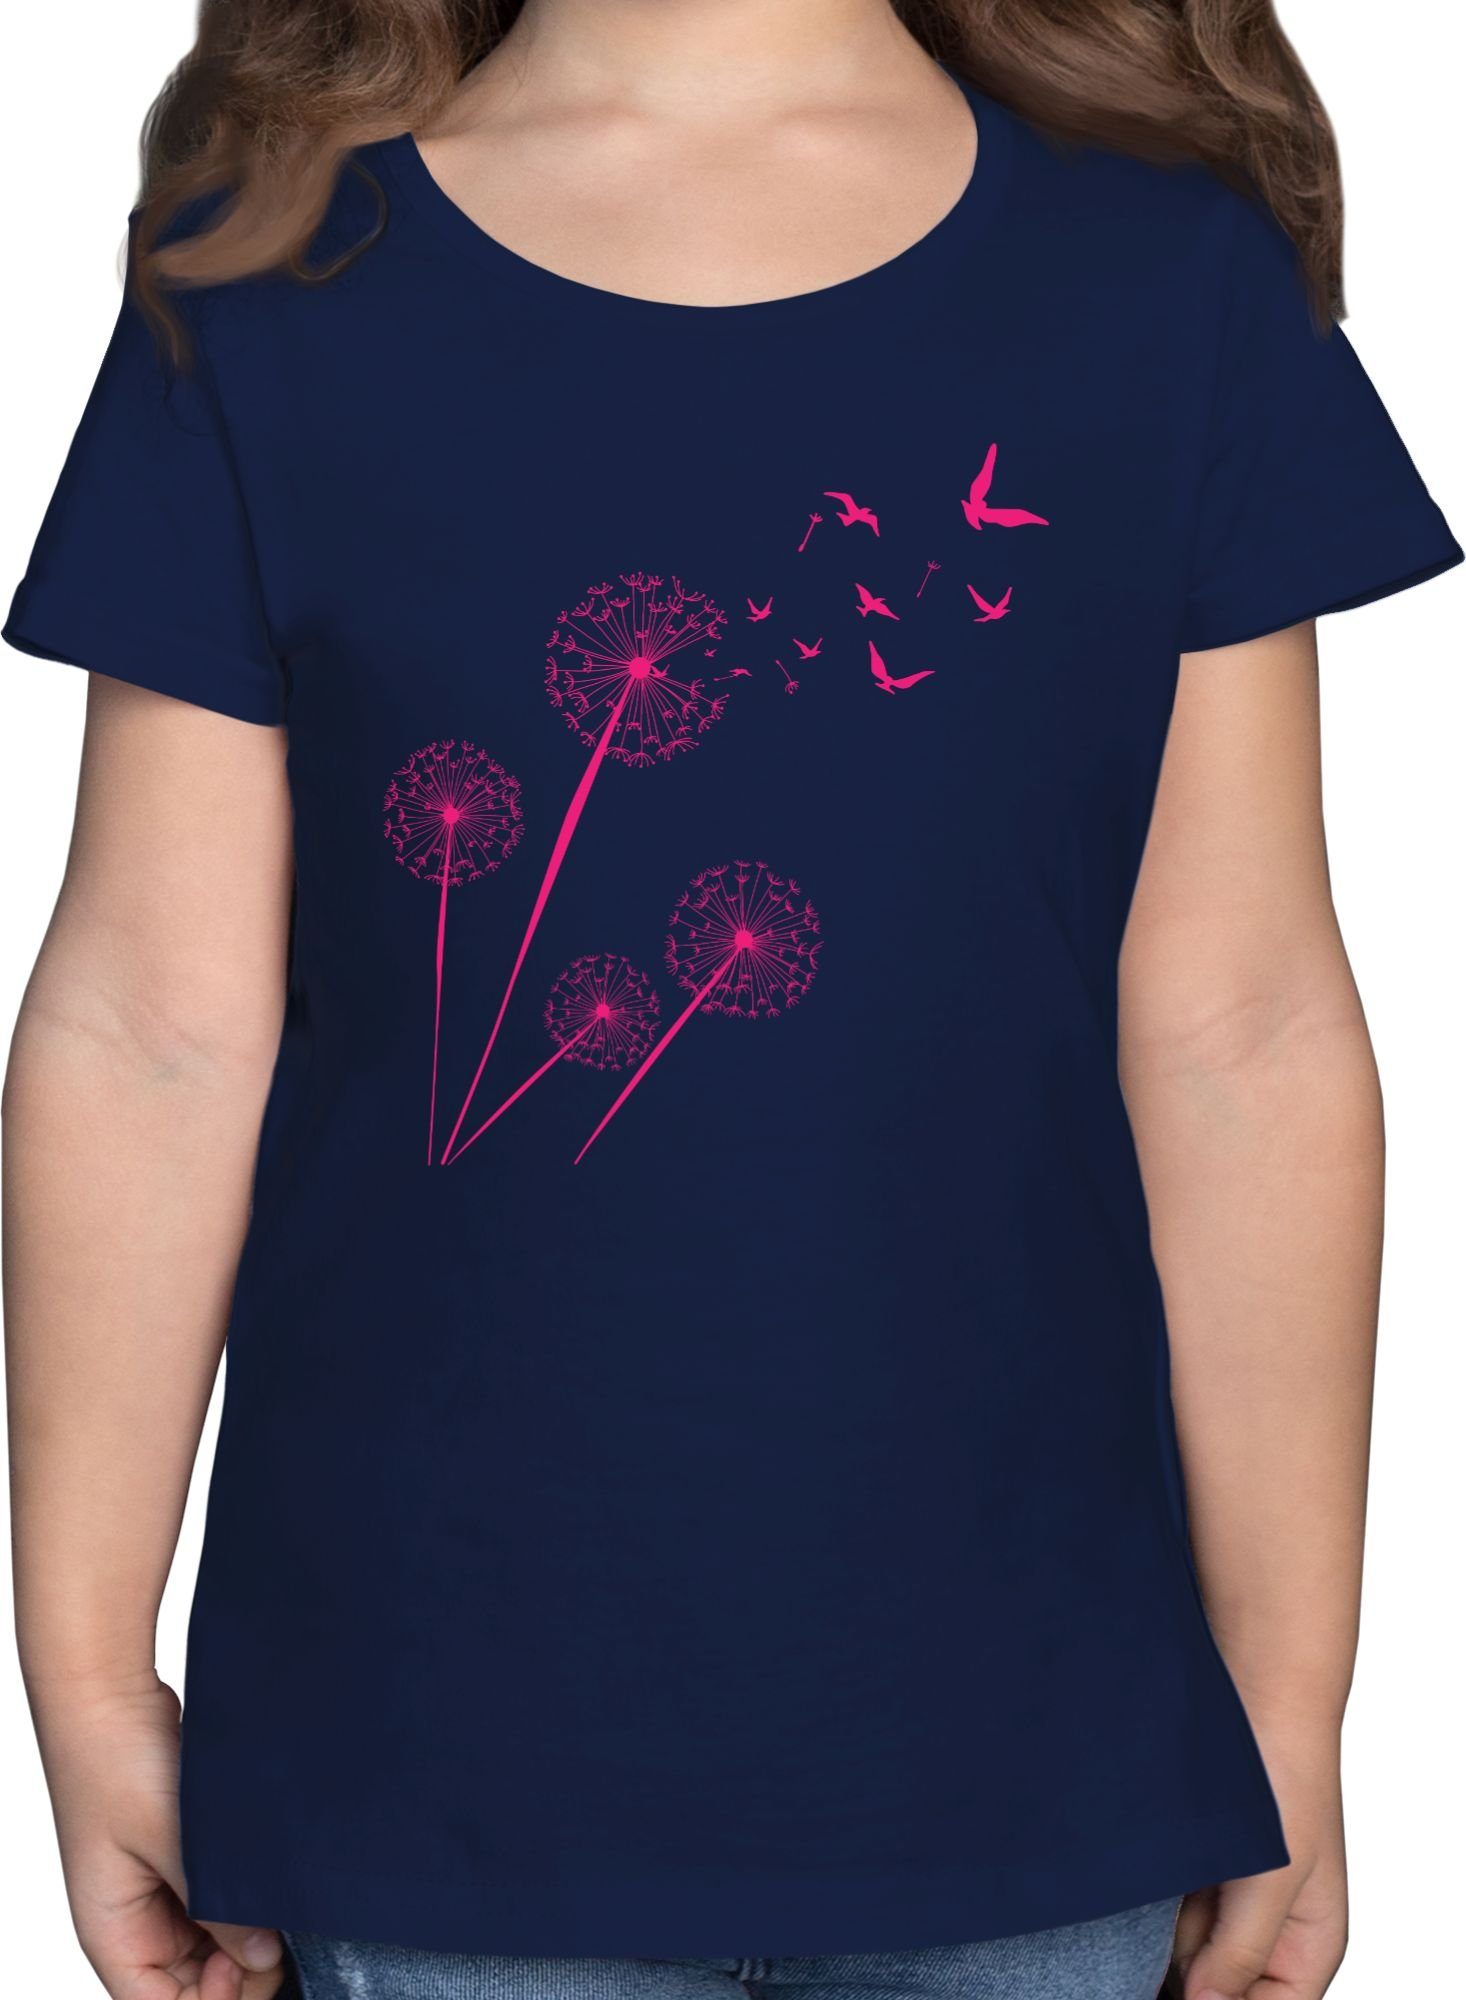 Shirtracer T-Shirt Pusteblume mit Vögel Kinderkleidung und Co 2 Dunkelblau